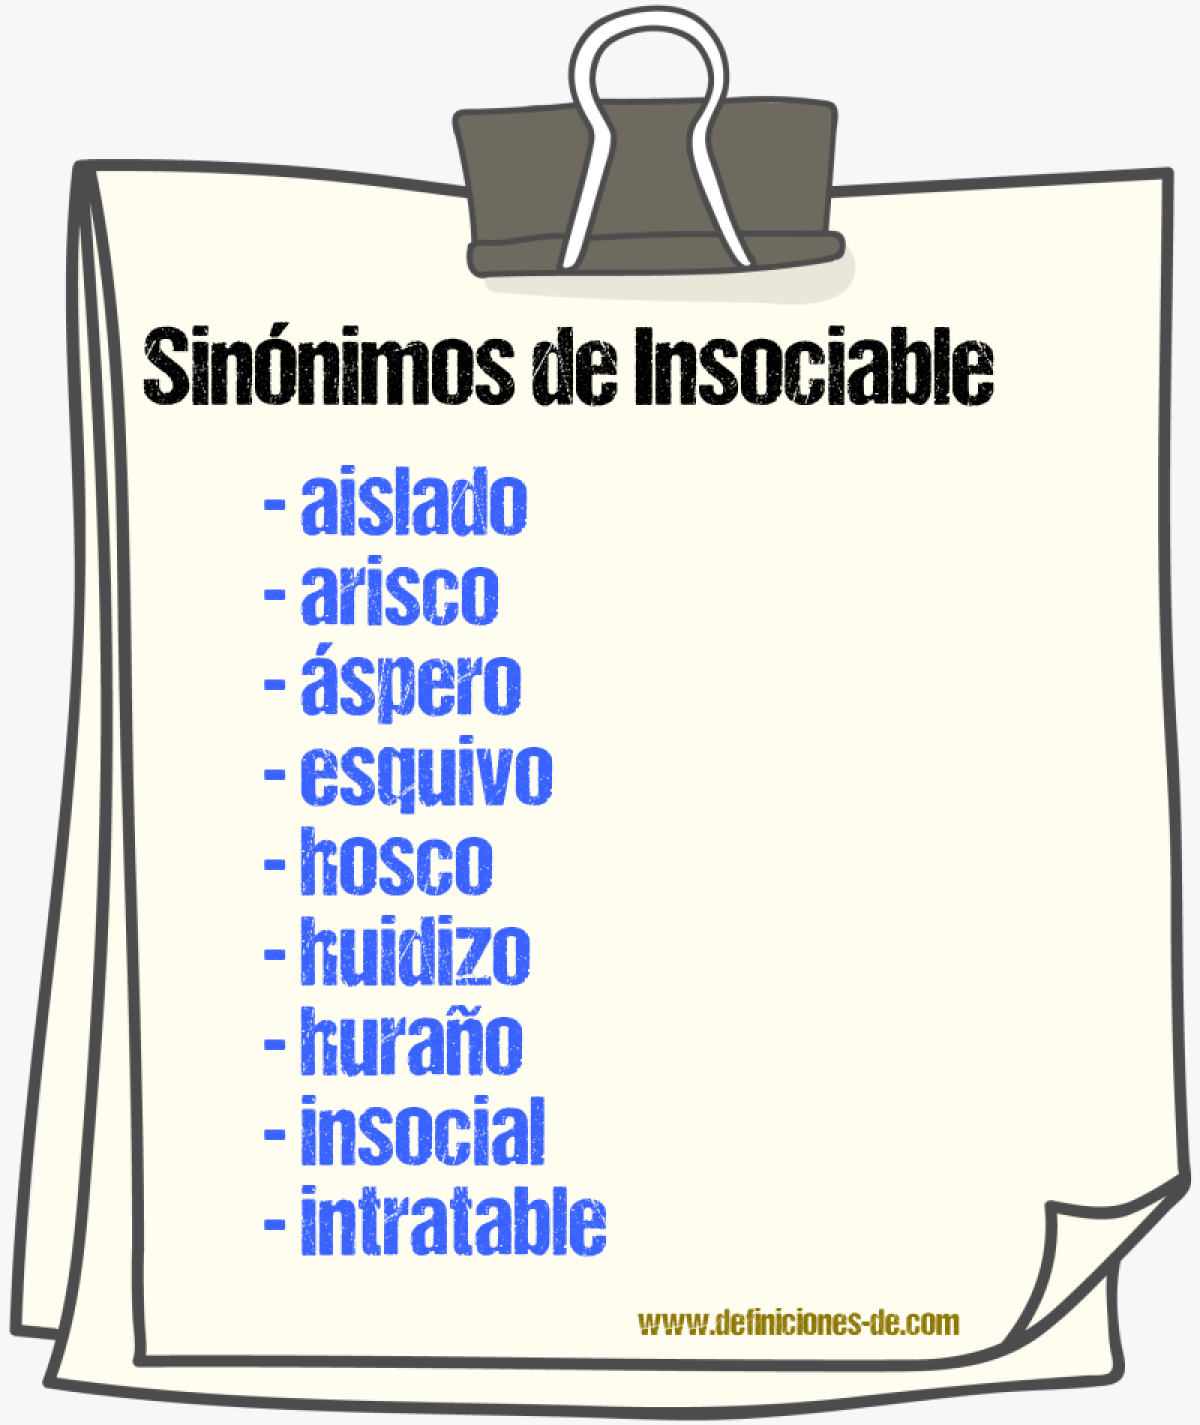 Sinónimos de insociable